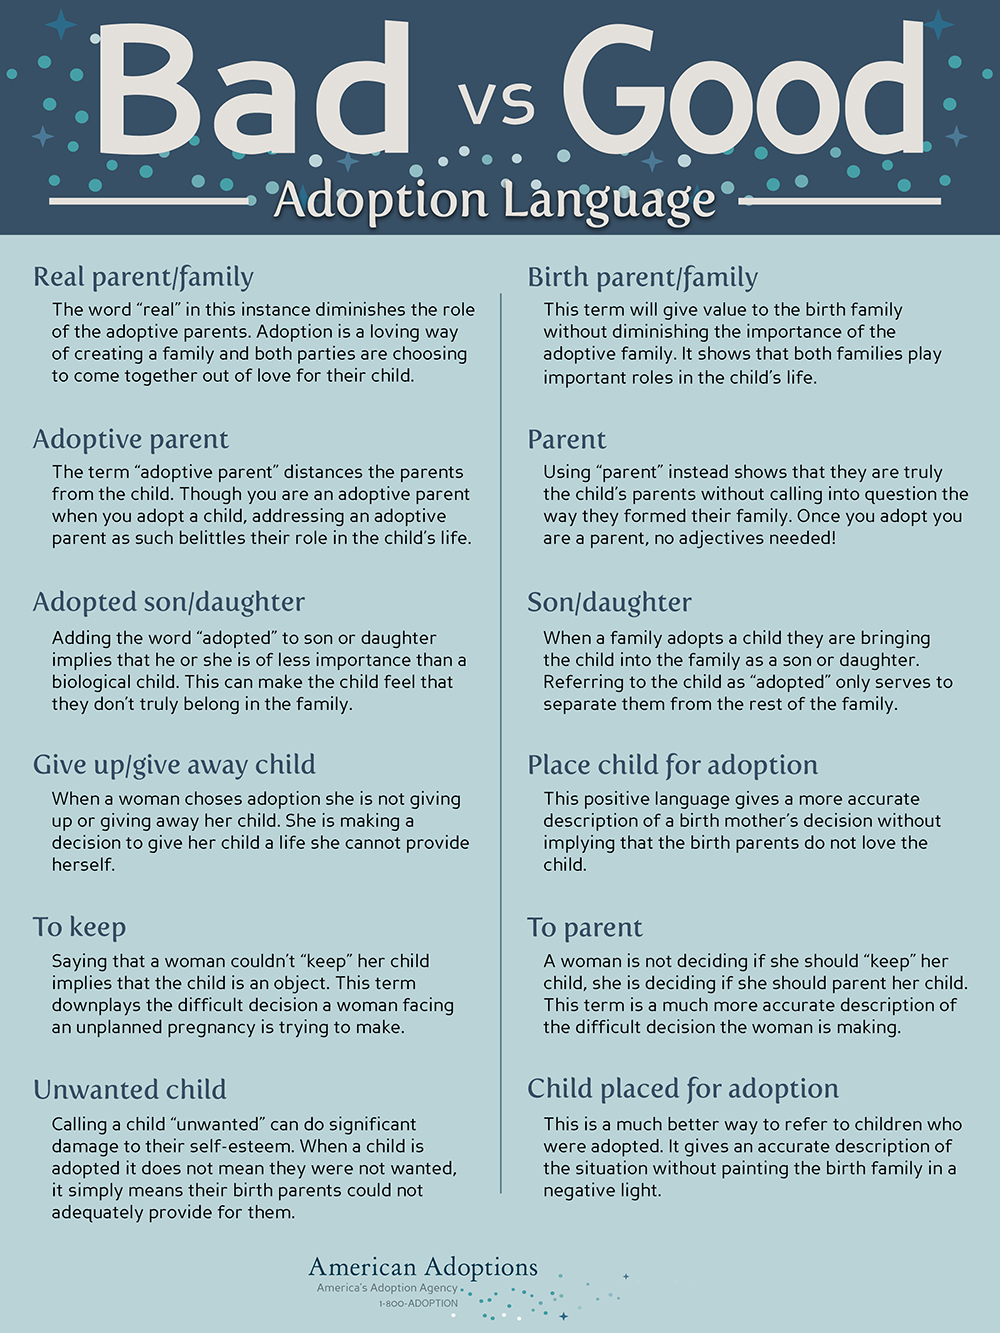 Adoption Language Infographic